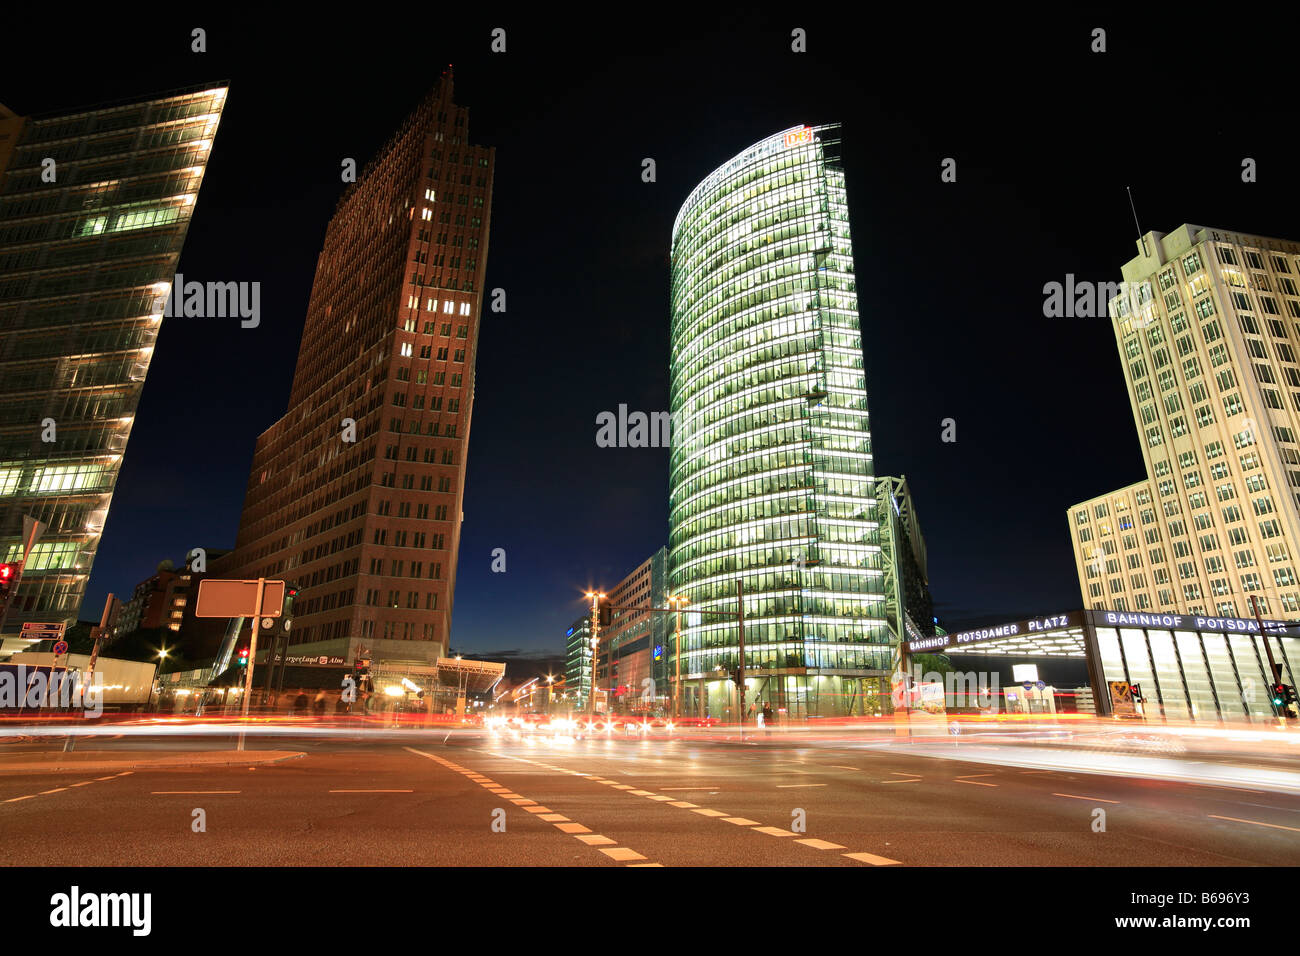 Debis Tower, Kollhof Building, Tower Deutsche Bahn AG at Potsdamer Platz in Berlin, Germany Stock Photo